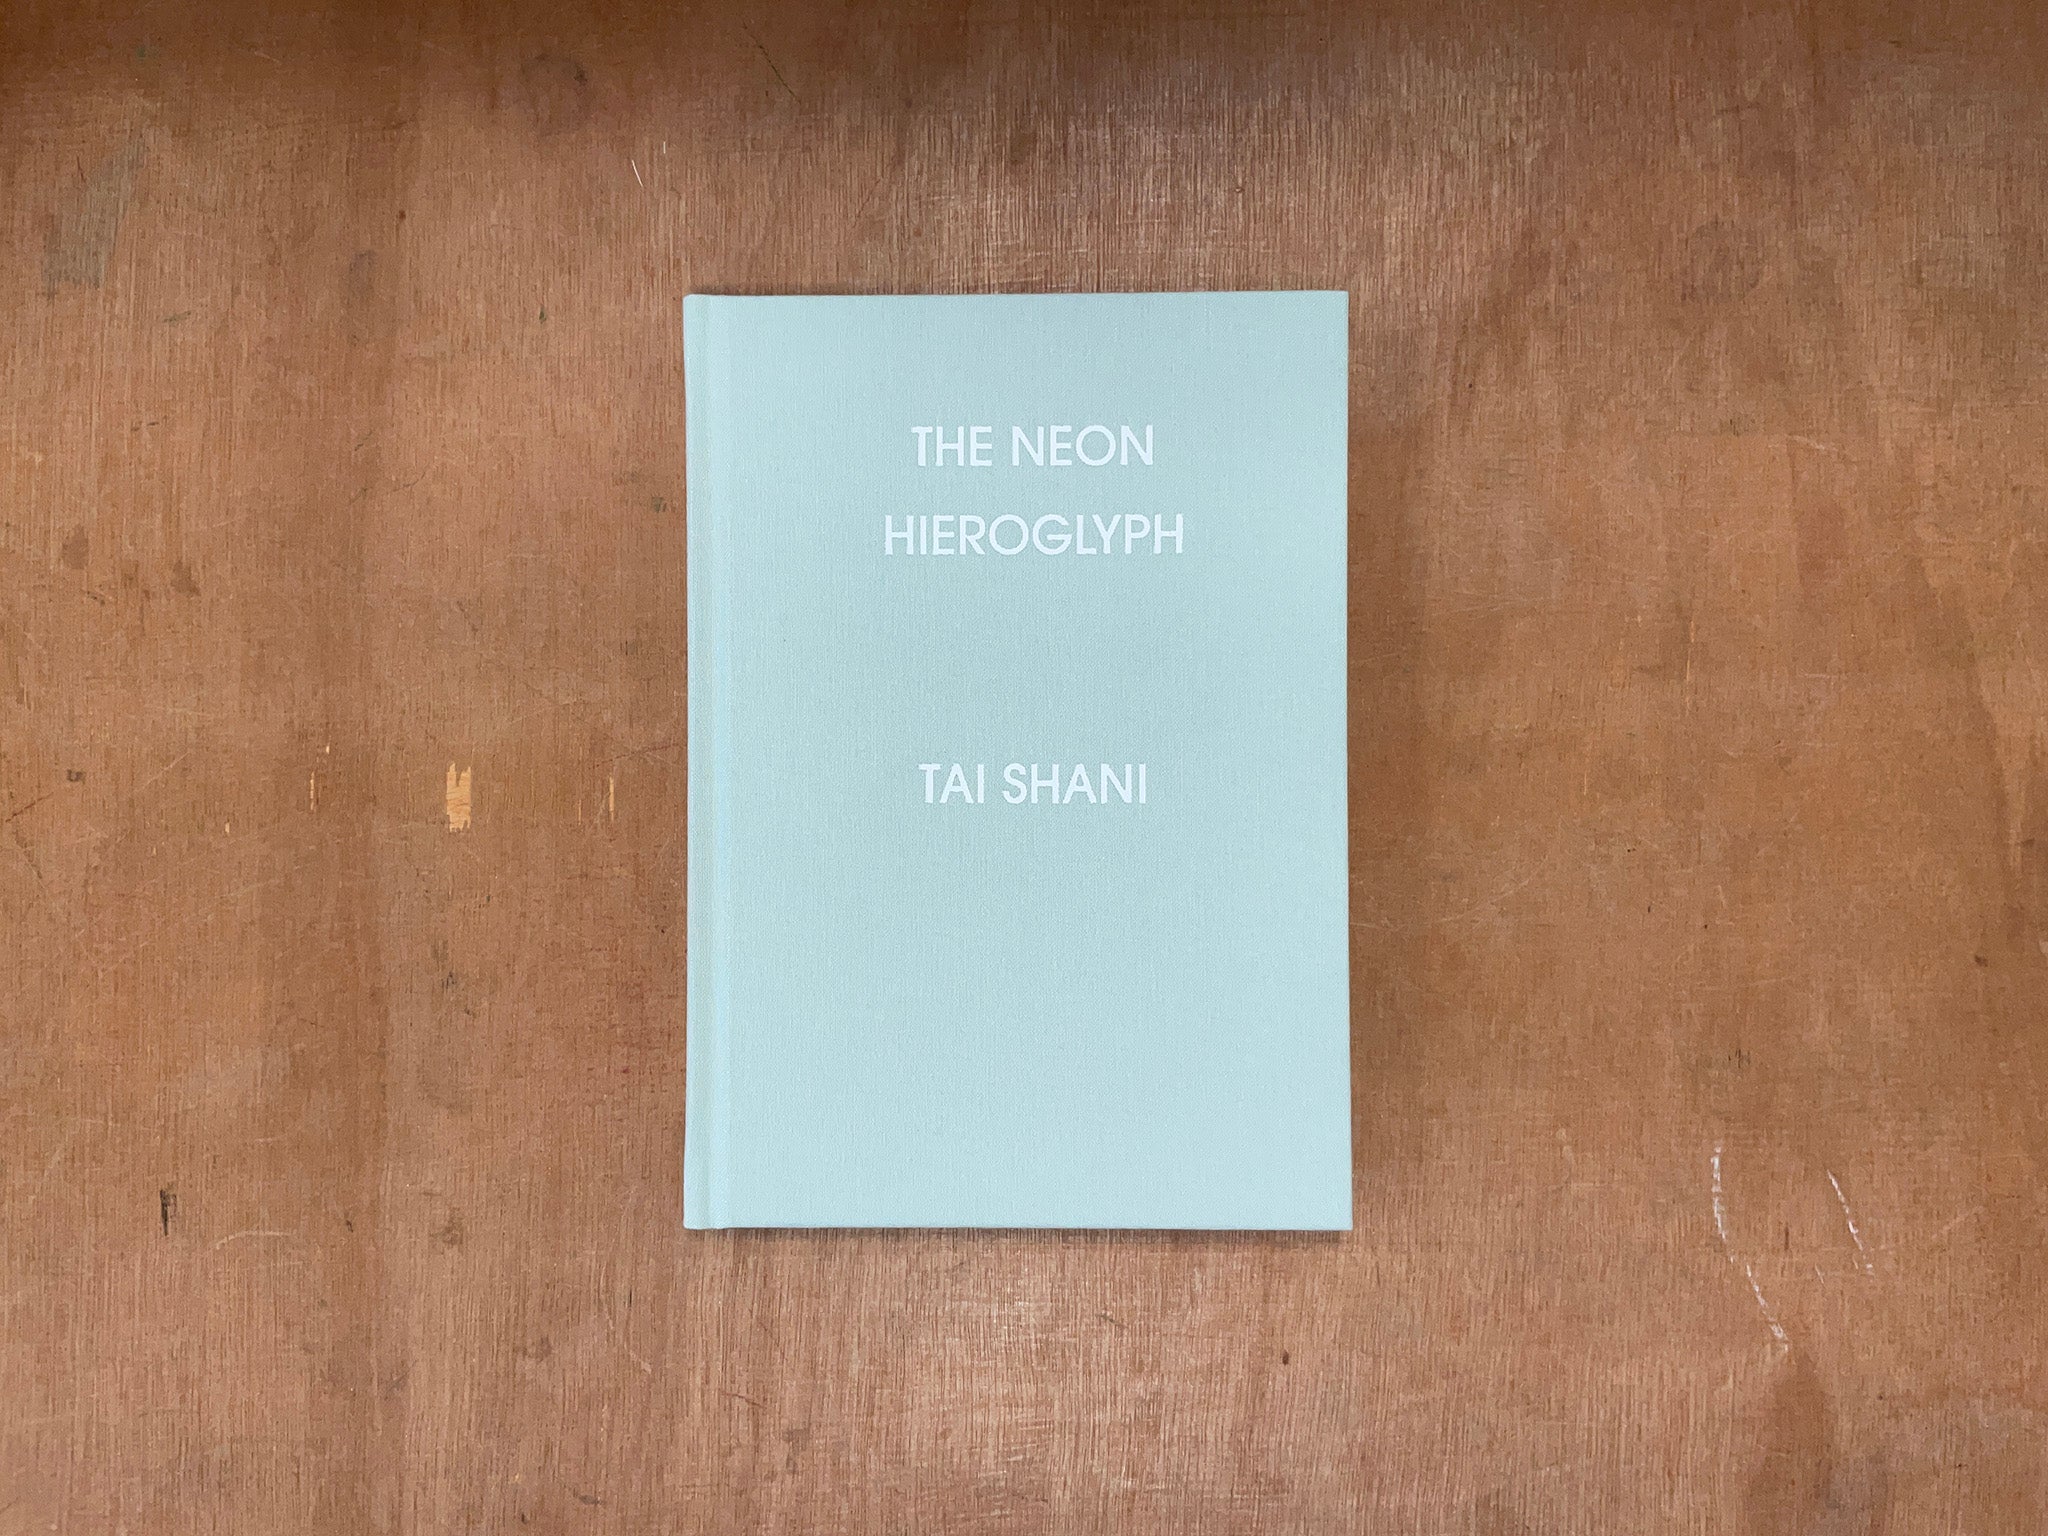 THE NEON HIEROGLYPH by Tai Shani